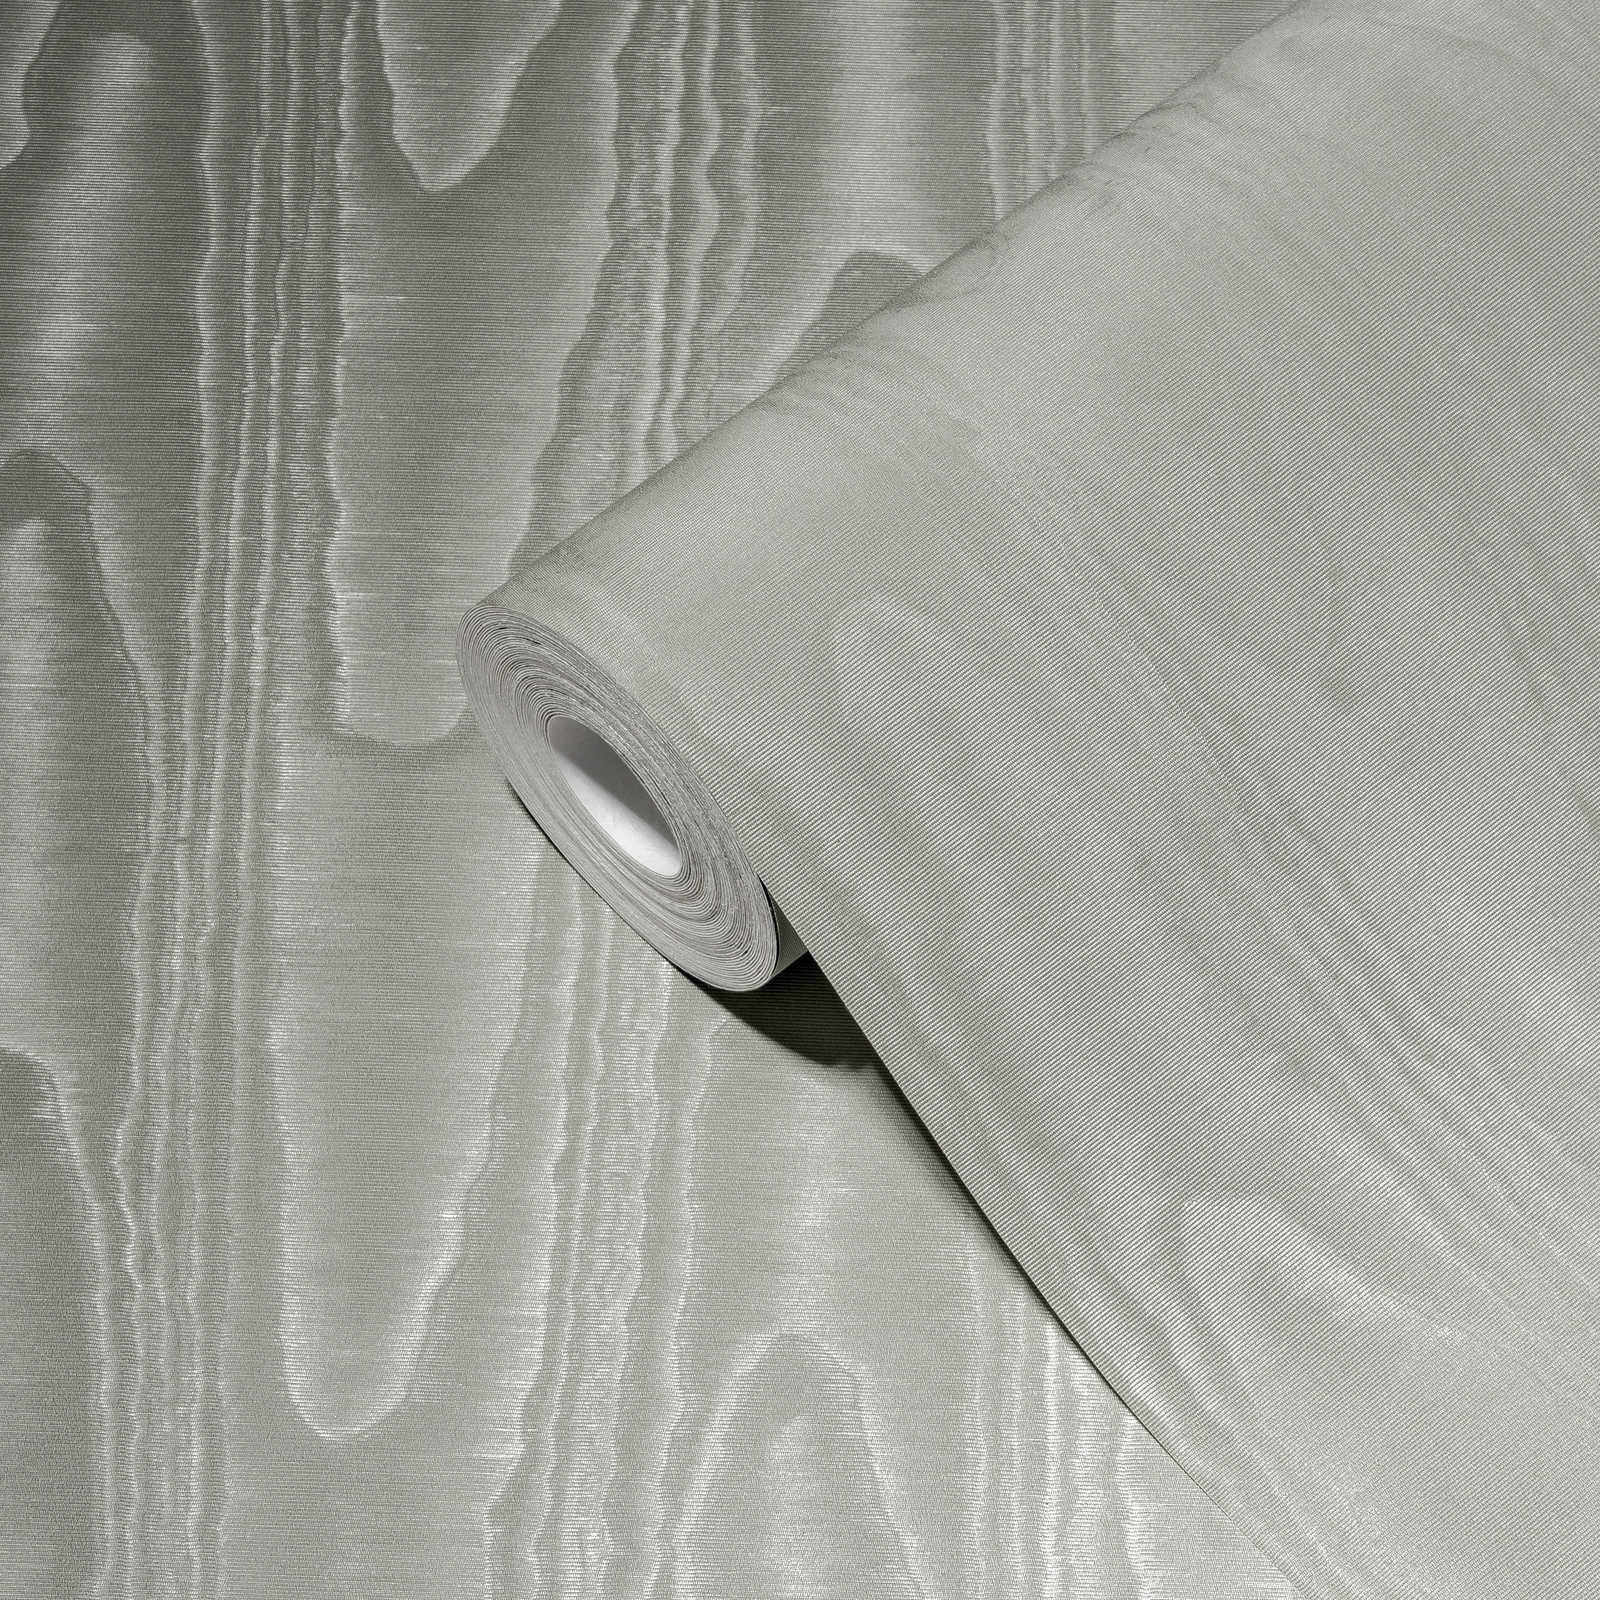             Papel pintado de seda gris plateado moiré y ondulado - Gris
        